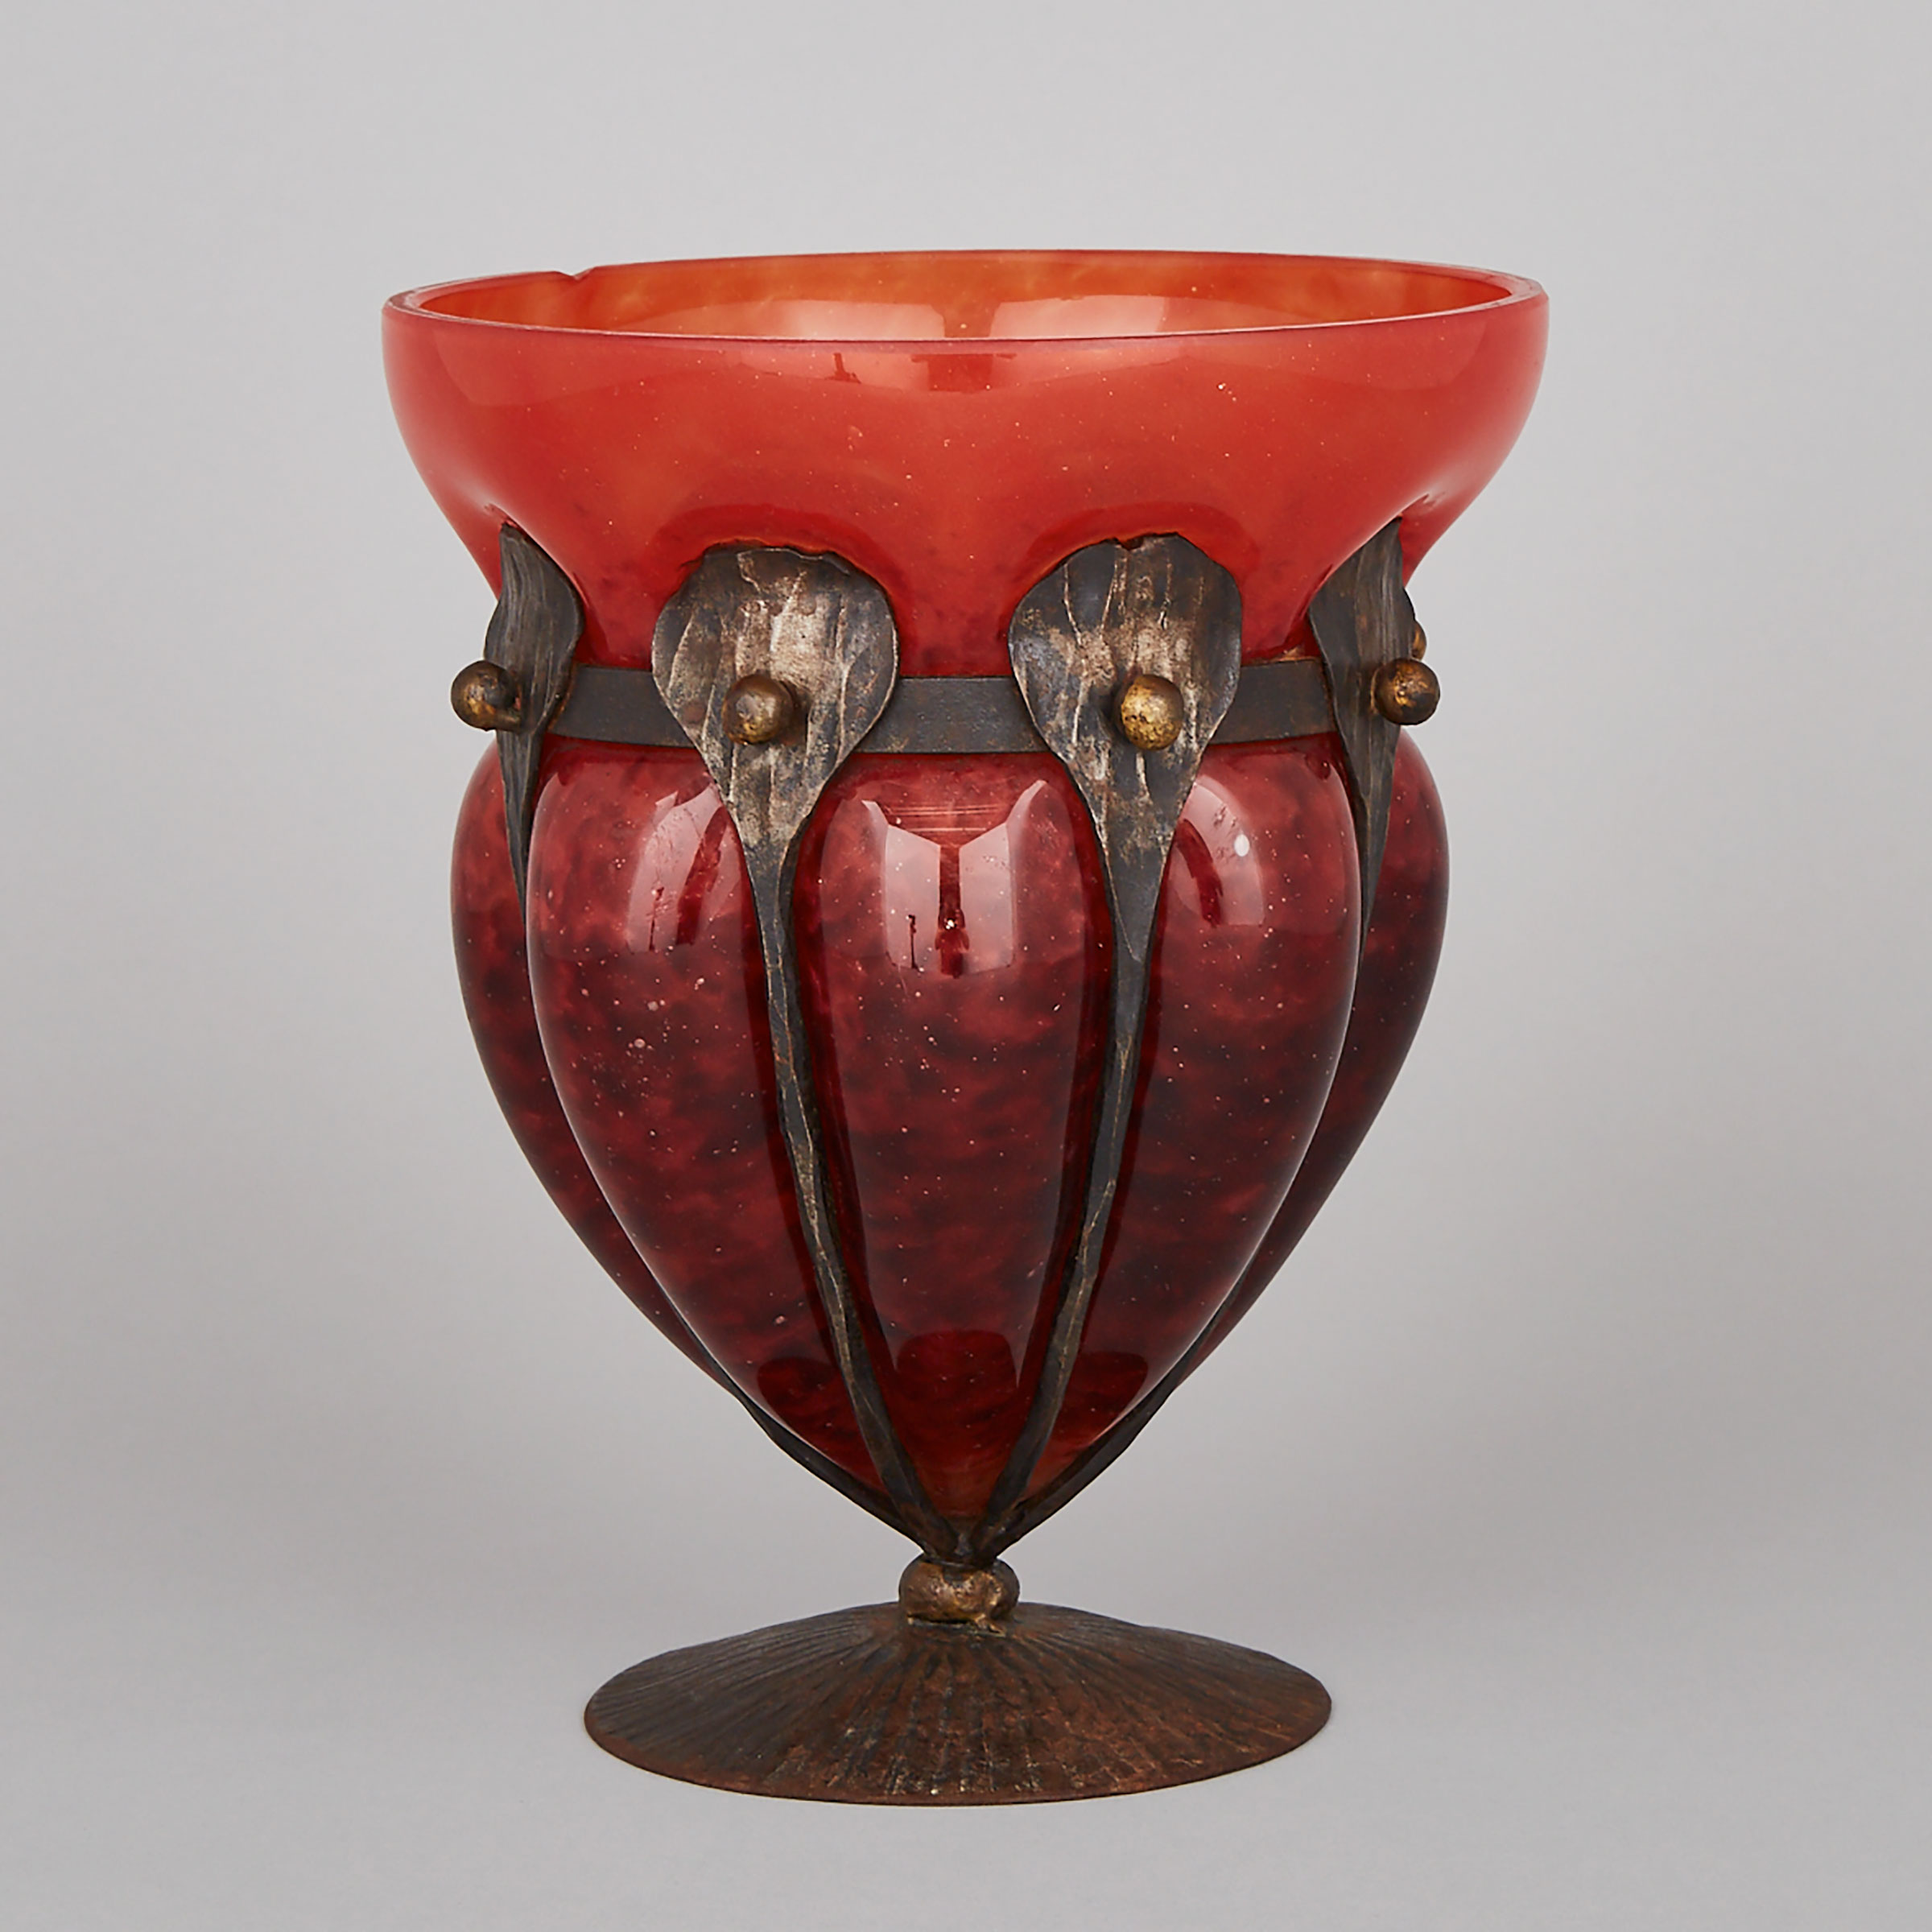 Schneider Wrought Metal Mounted Mottled Orange Glass Vase, early 20th century